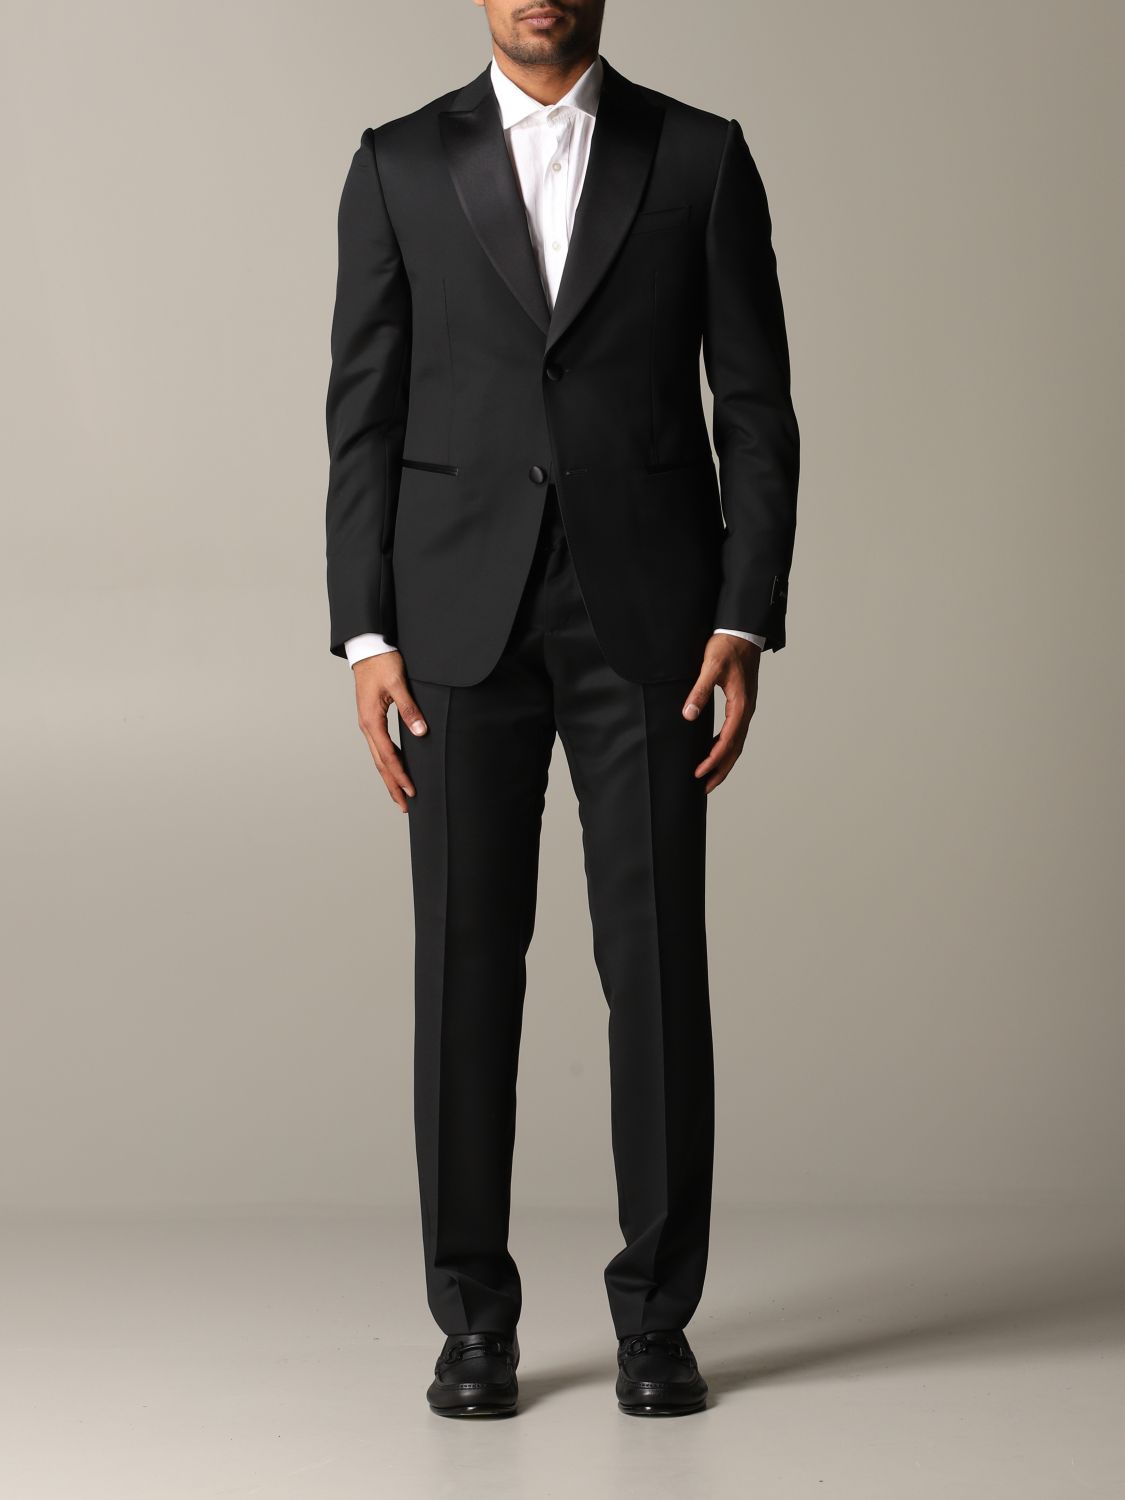 Z Zegna Outlet: drop 7 tuxedo suit in mohair wool - Black | Z Zegna ...